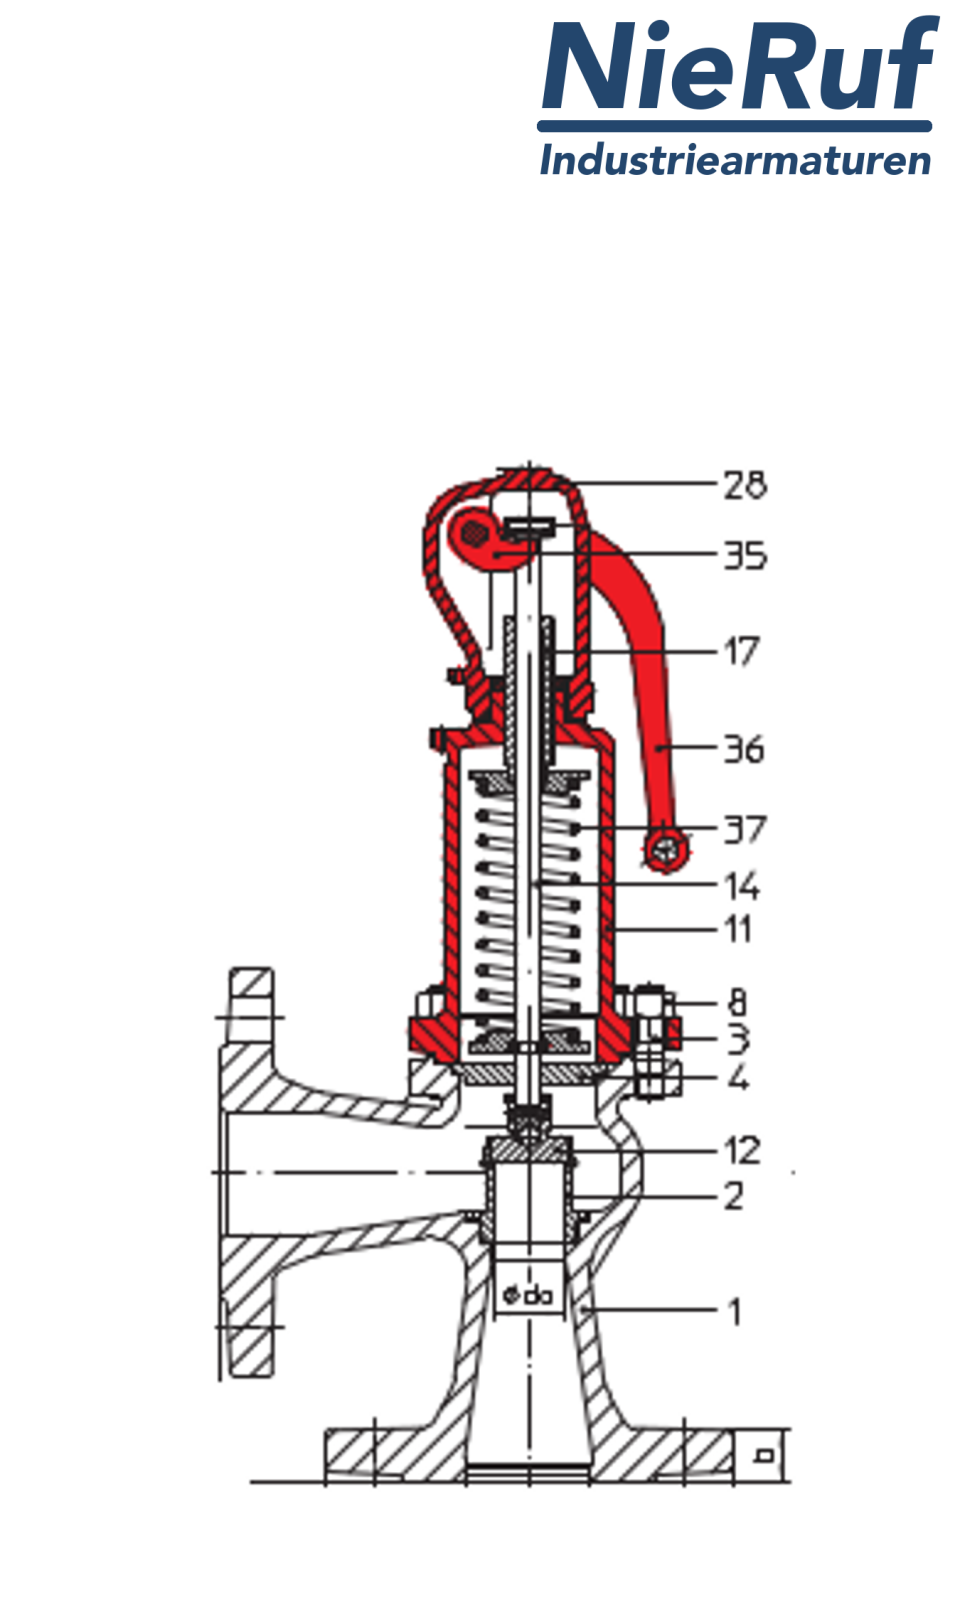 flange-safety valve DN40/DN40 SF02, cast steel 1.0619+N FPM, with lever